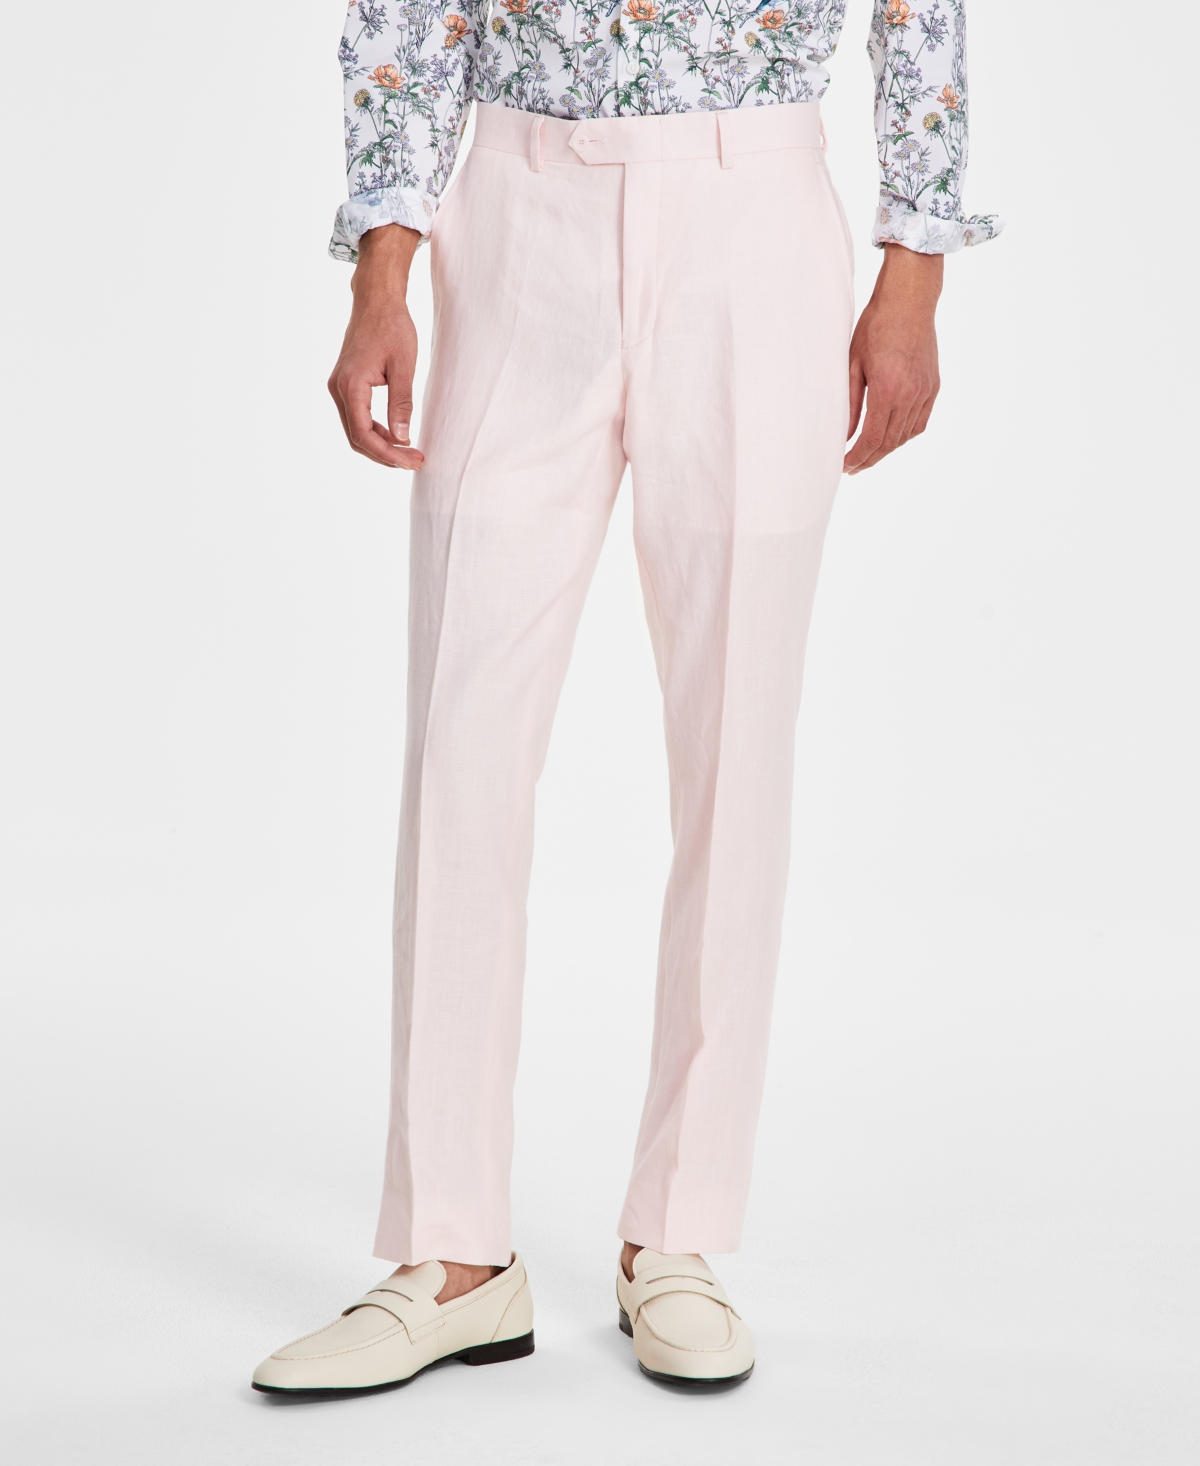 Men's Slim-Fit Linen Suit Pants, Created for Macy's - White